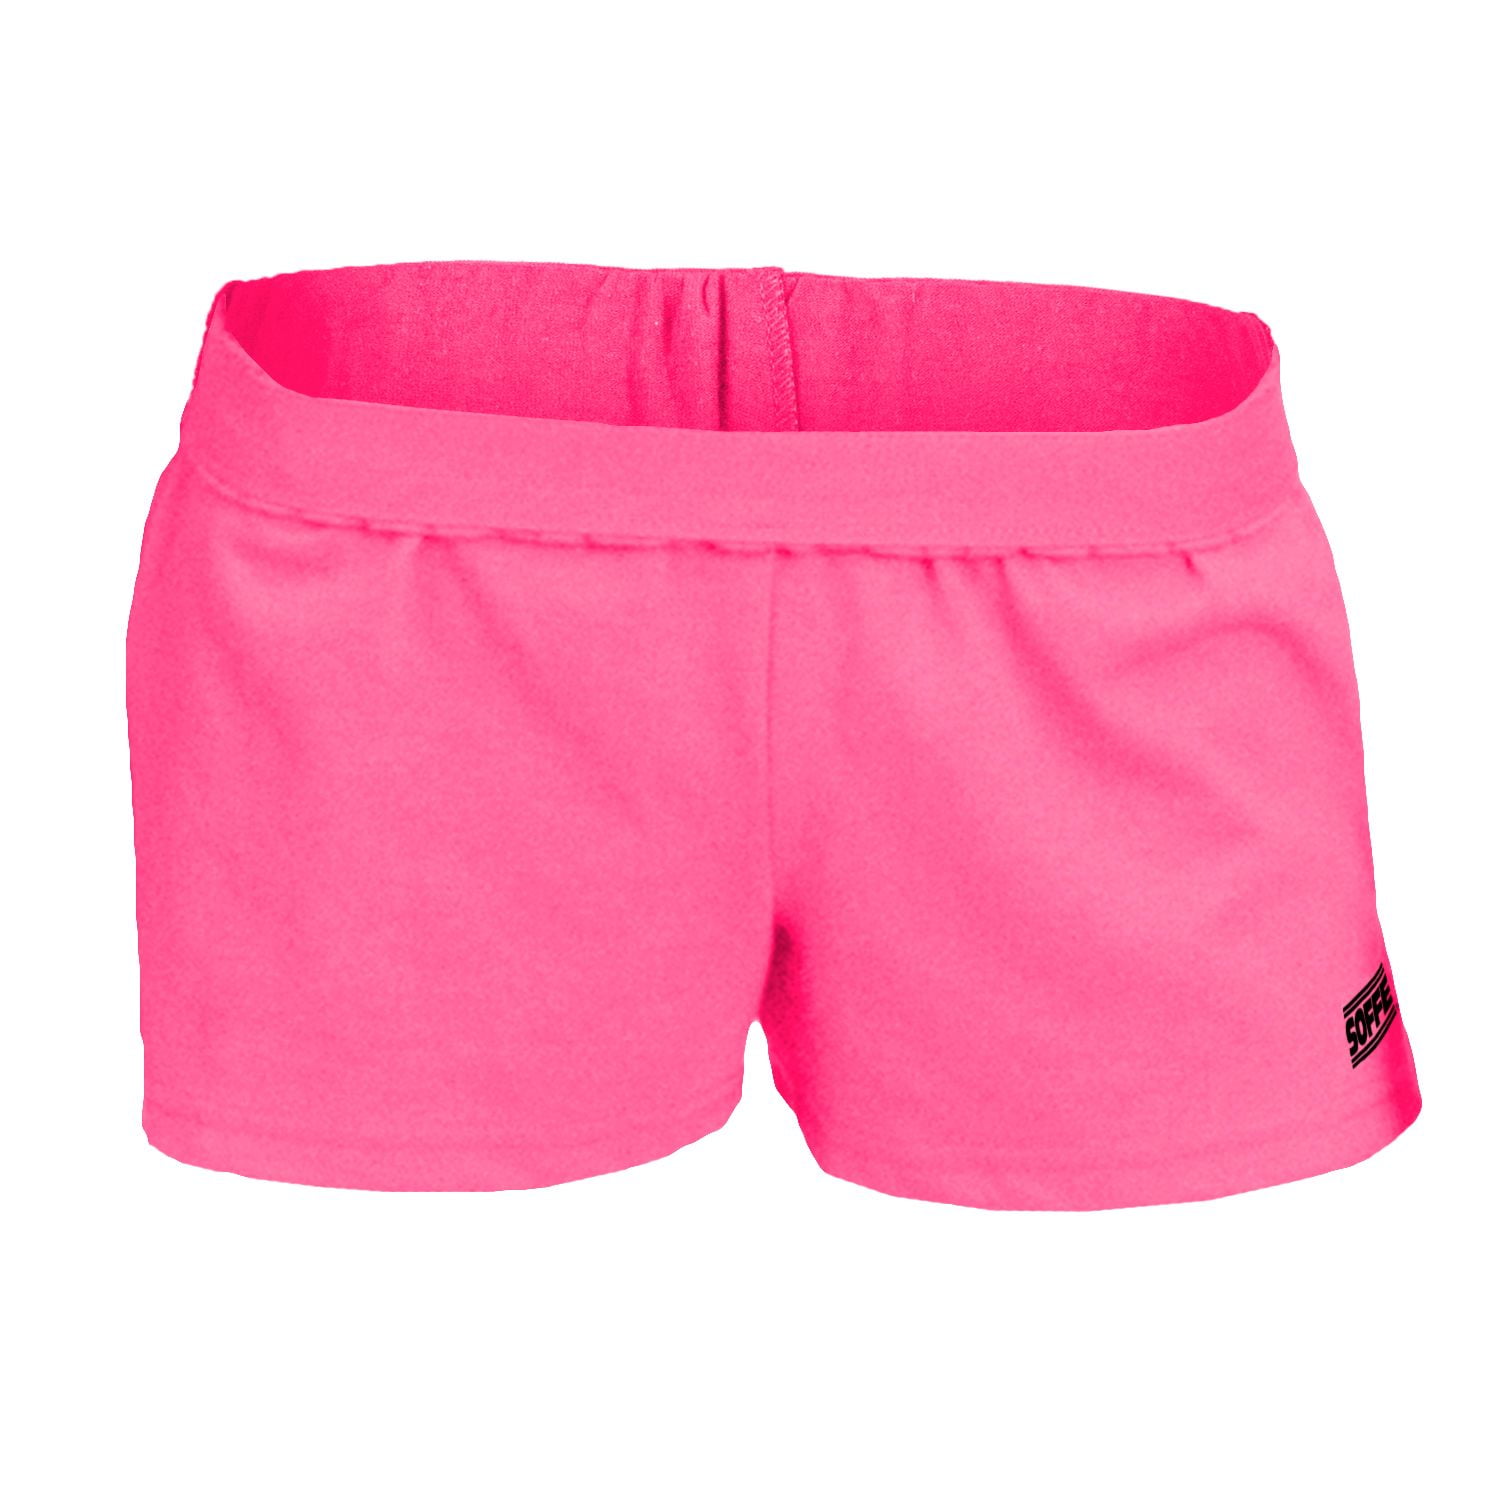 Soffe Women's New Soffe Shorts - Walmart.com